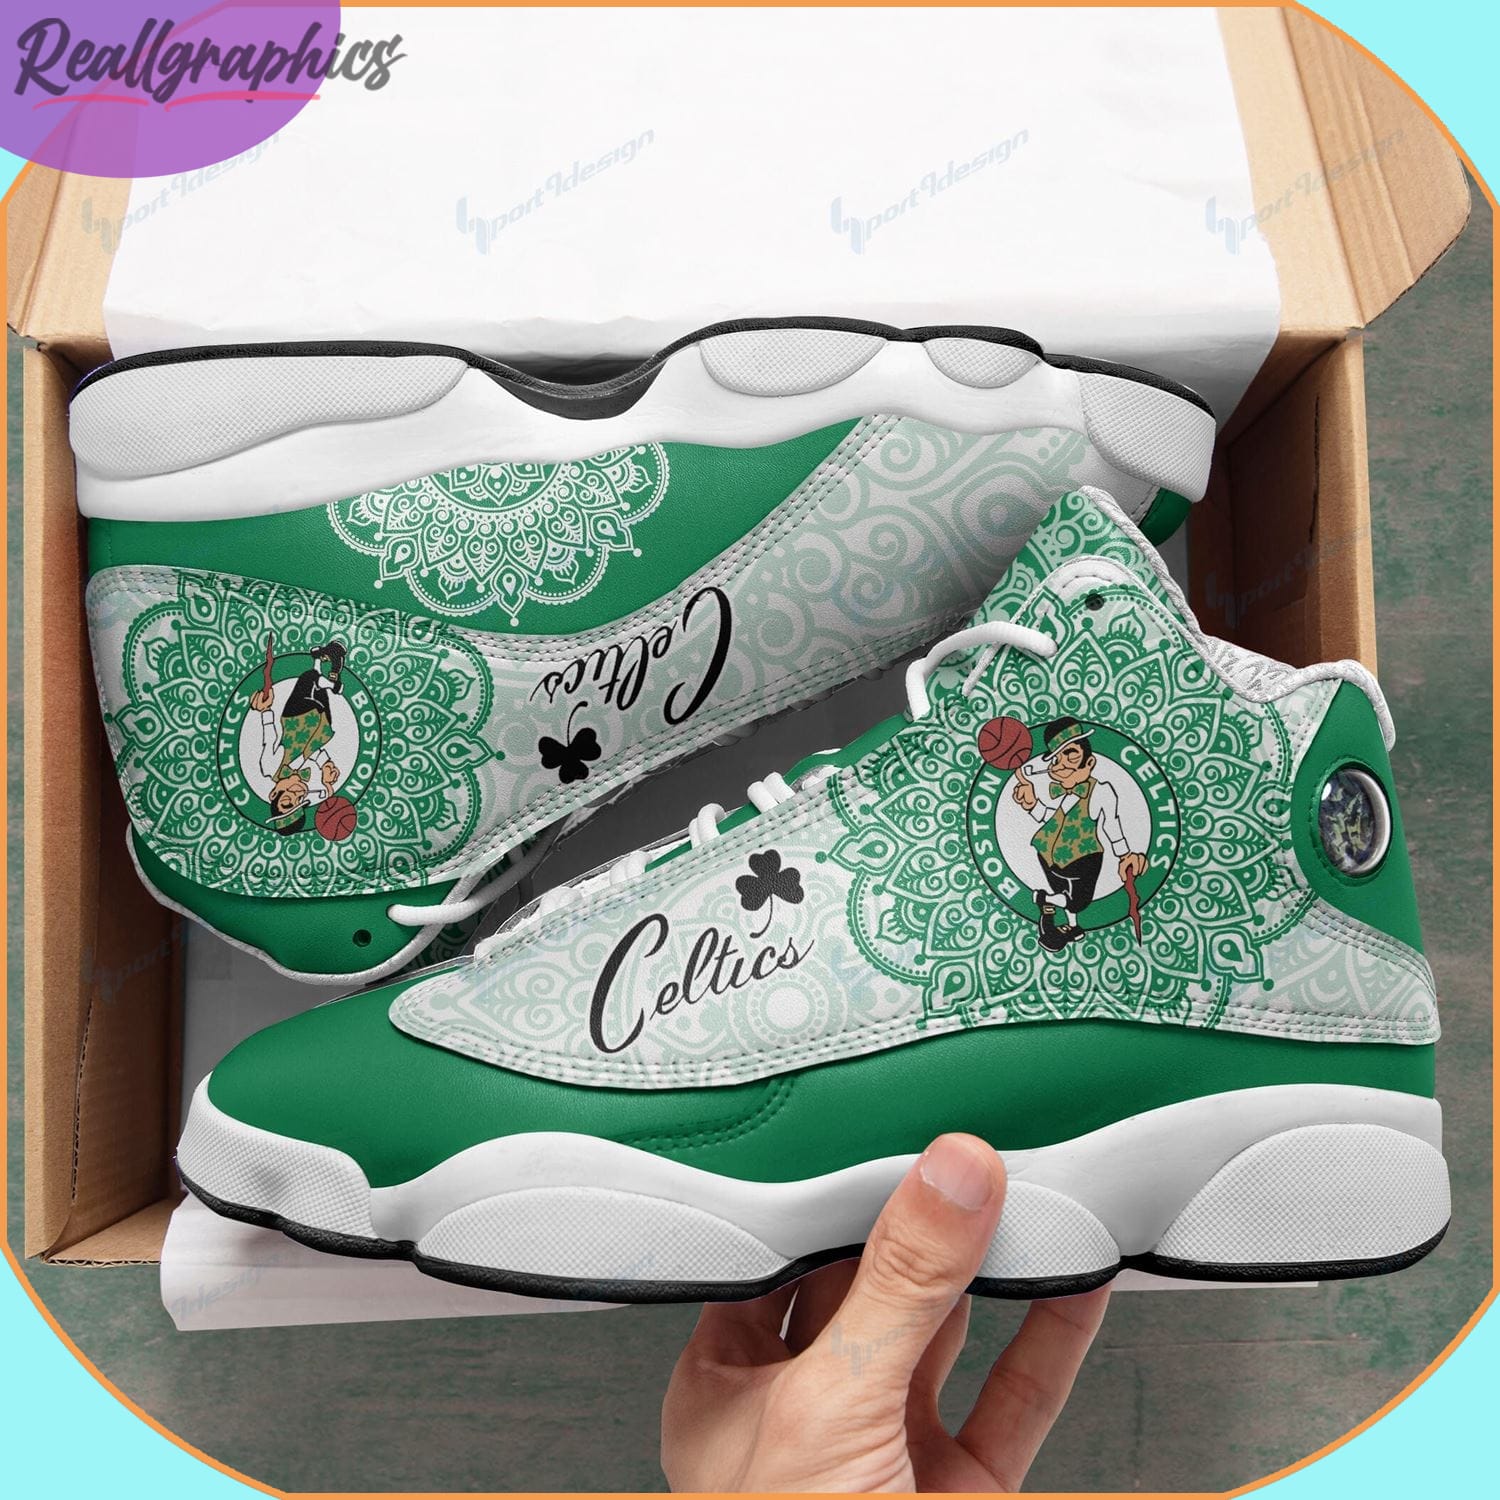 Boston Celtics Team Air Jordan 13 Sneakers - Reallgraphics